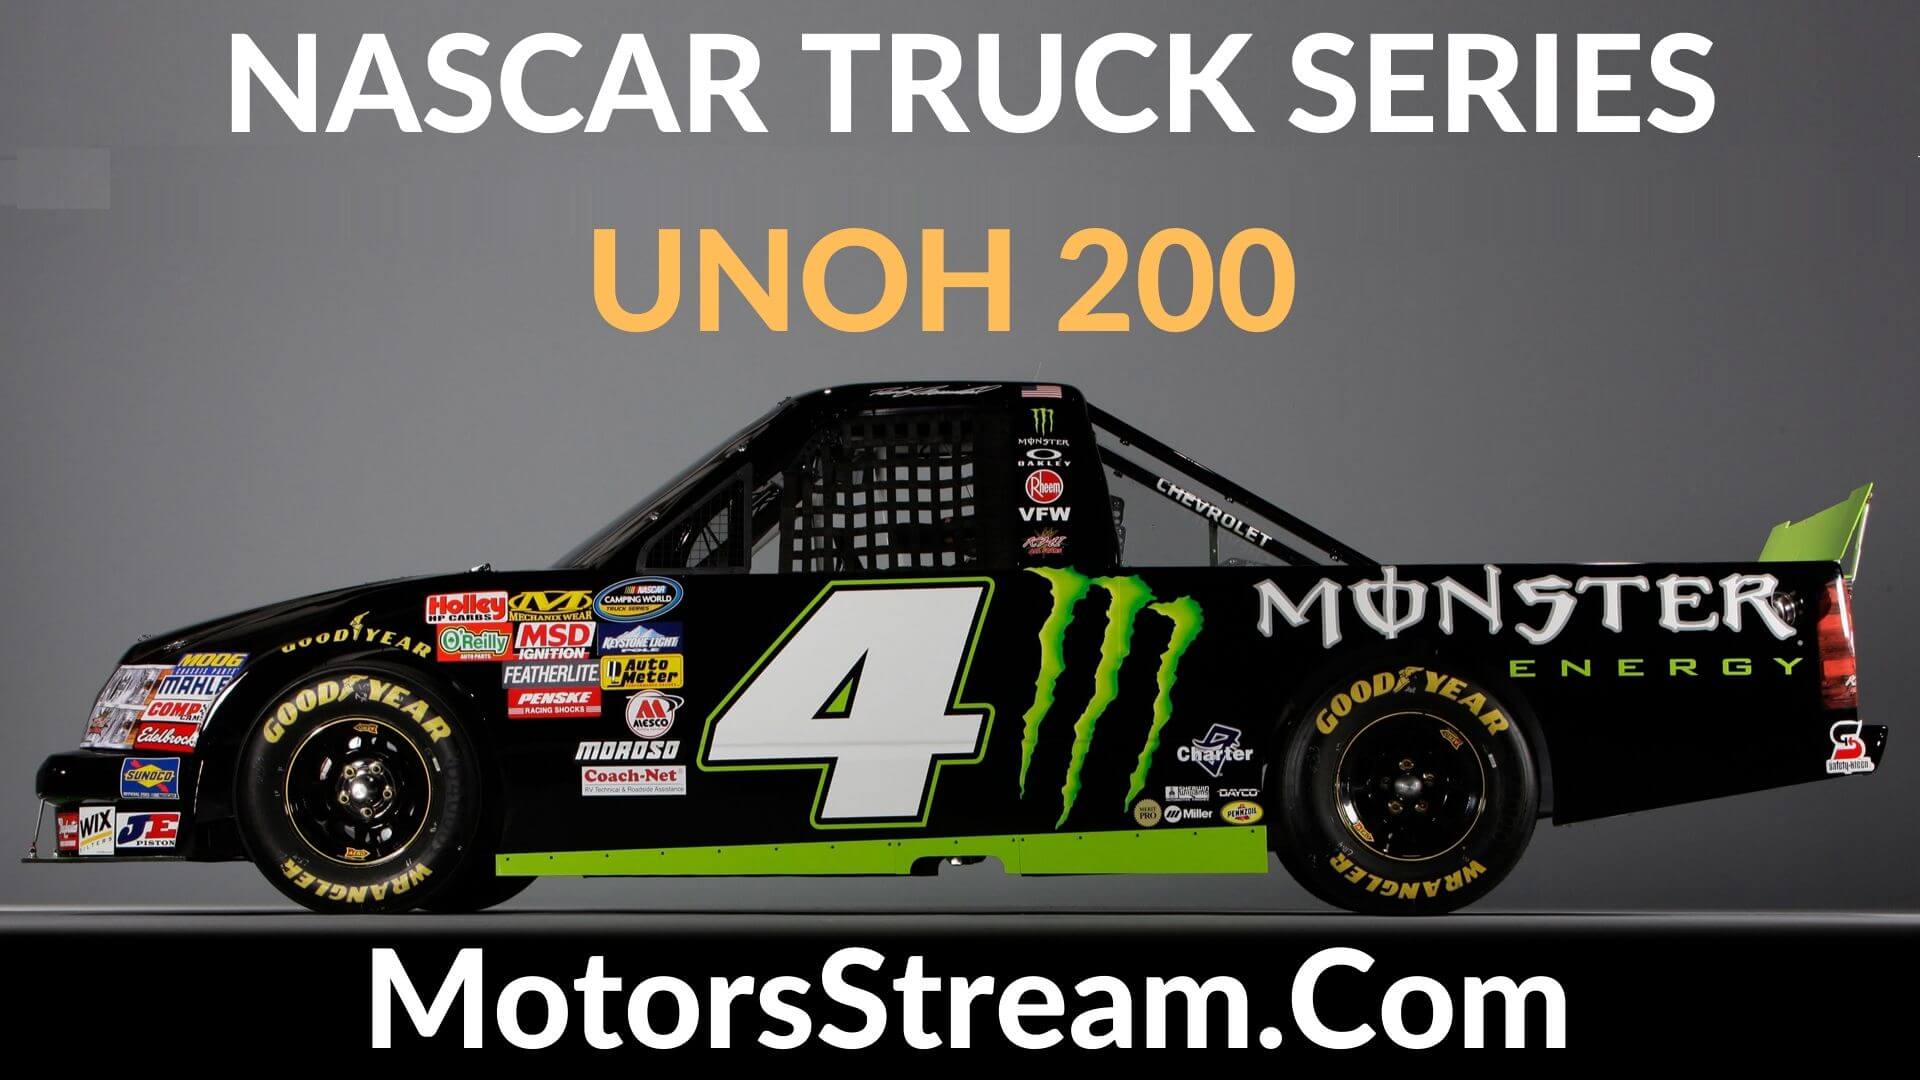 UNOH 200 Live Stream NASCAR Truck Series